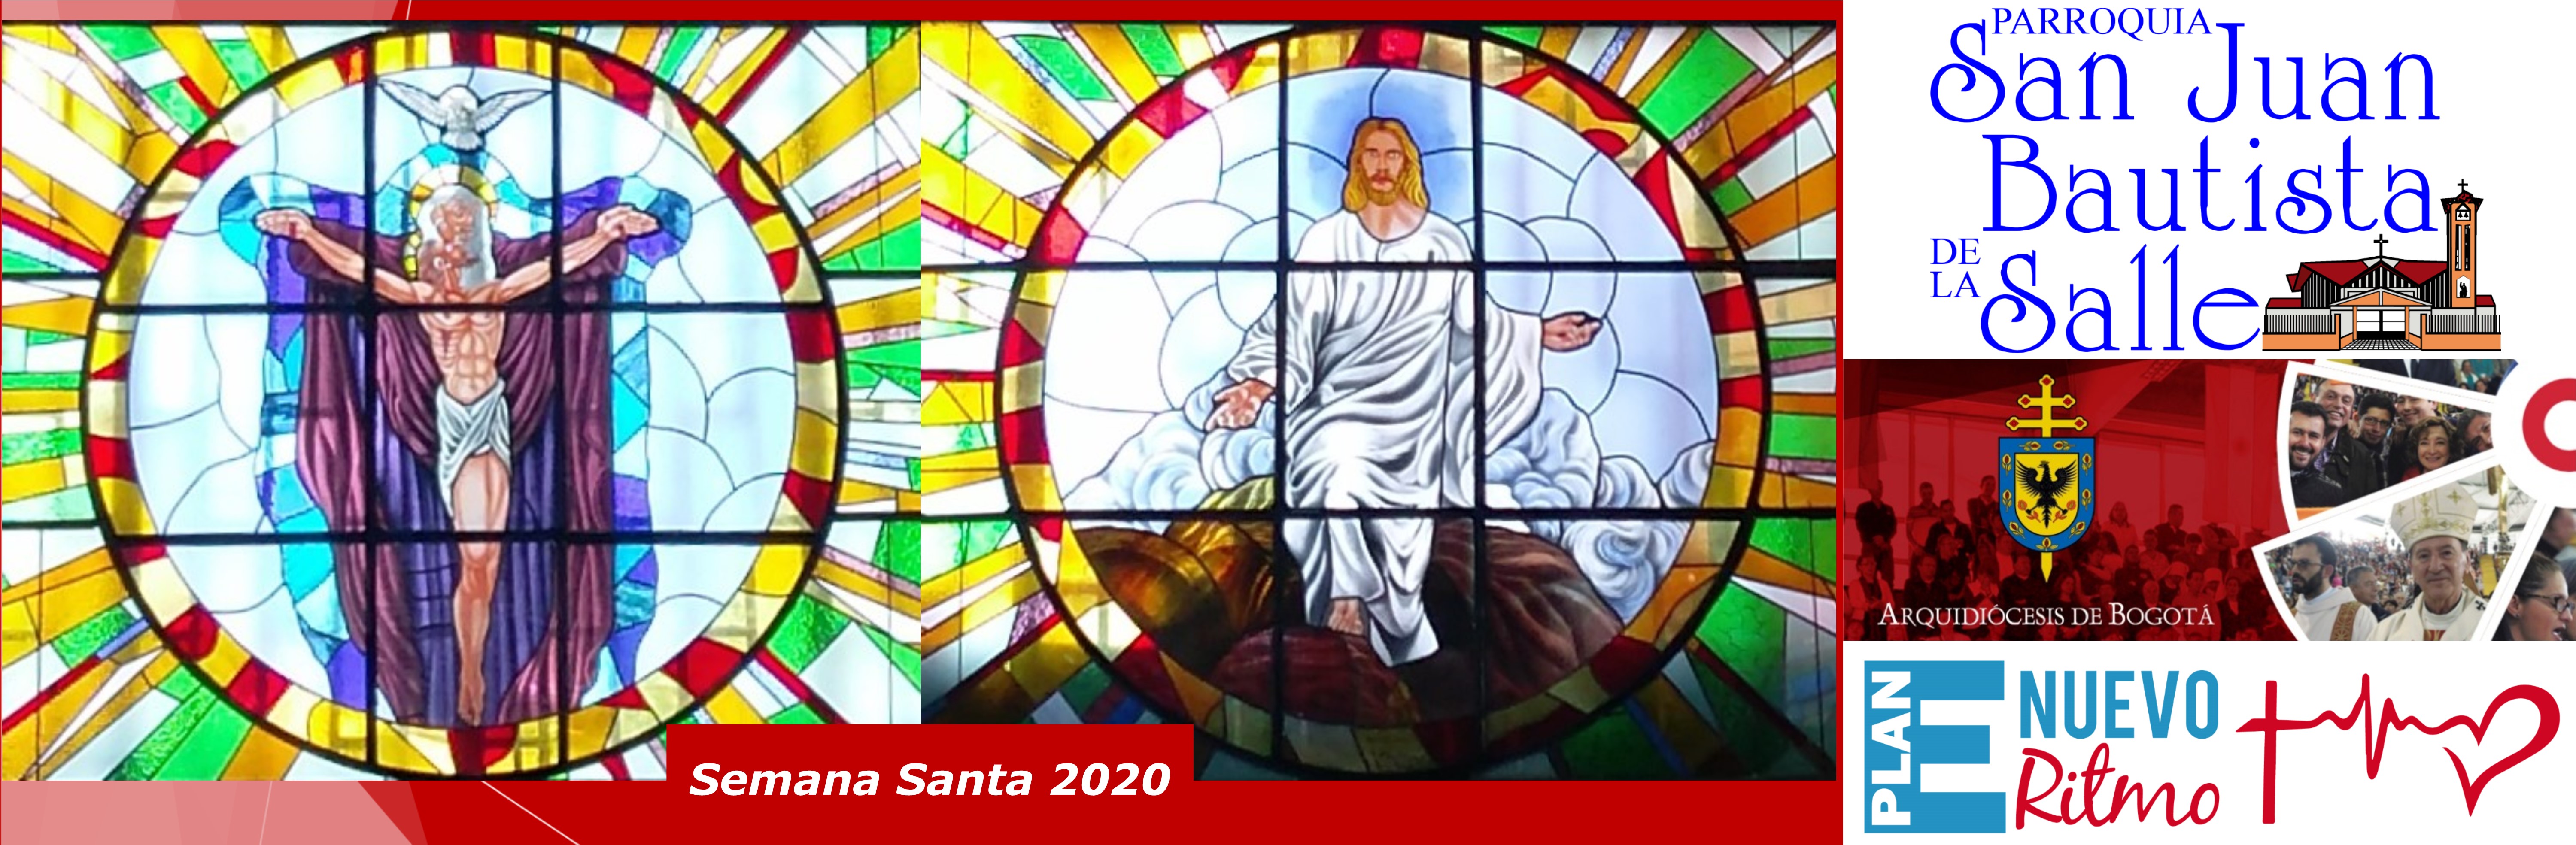 https://arquimedia.s3.amazonaws.com/104/memoria-parroquial-2020/semana-santa-2020jpg.jpg